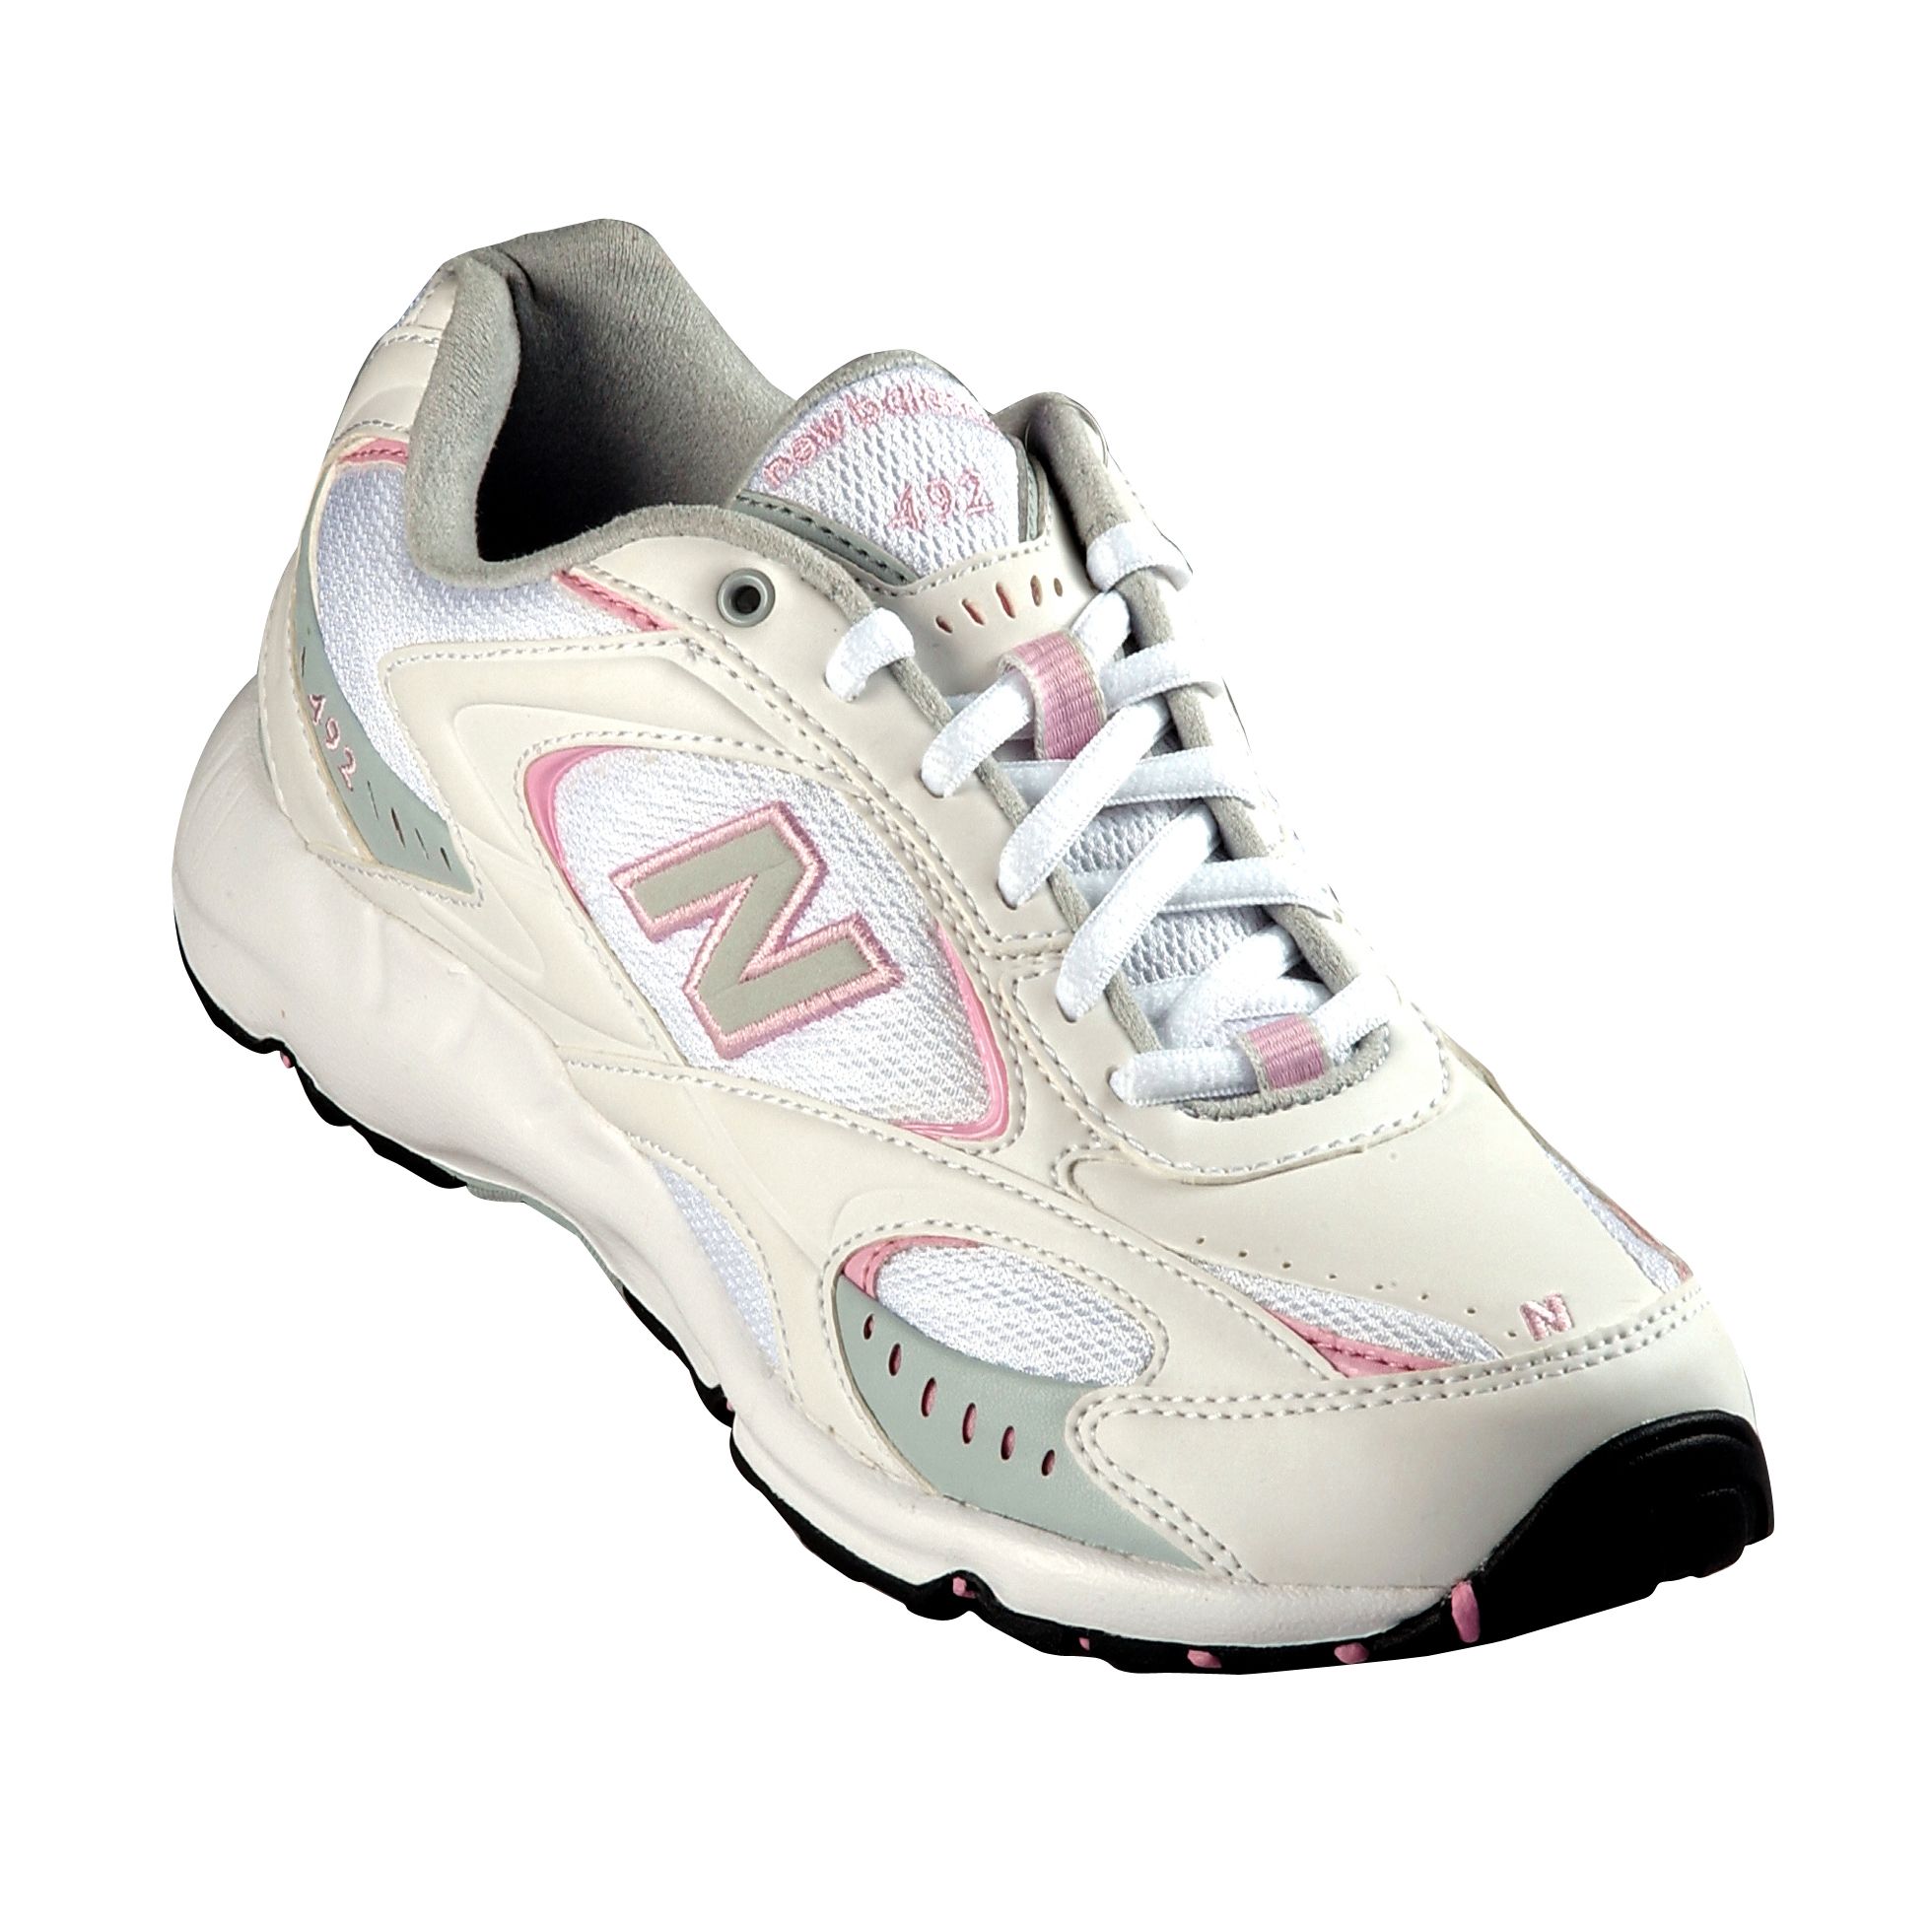 New Balance Women's 492 Shoe - Gray/Pink - Clothing, Shoes 